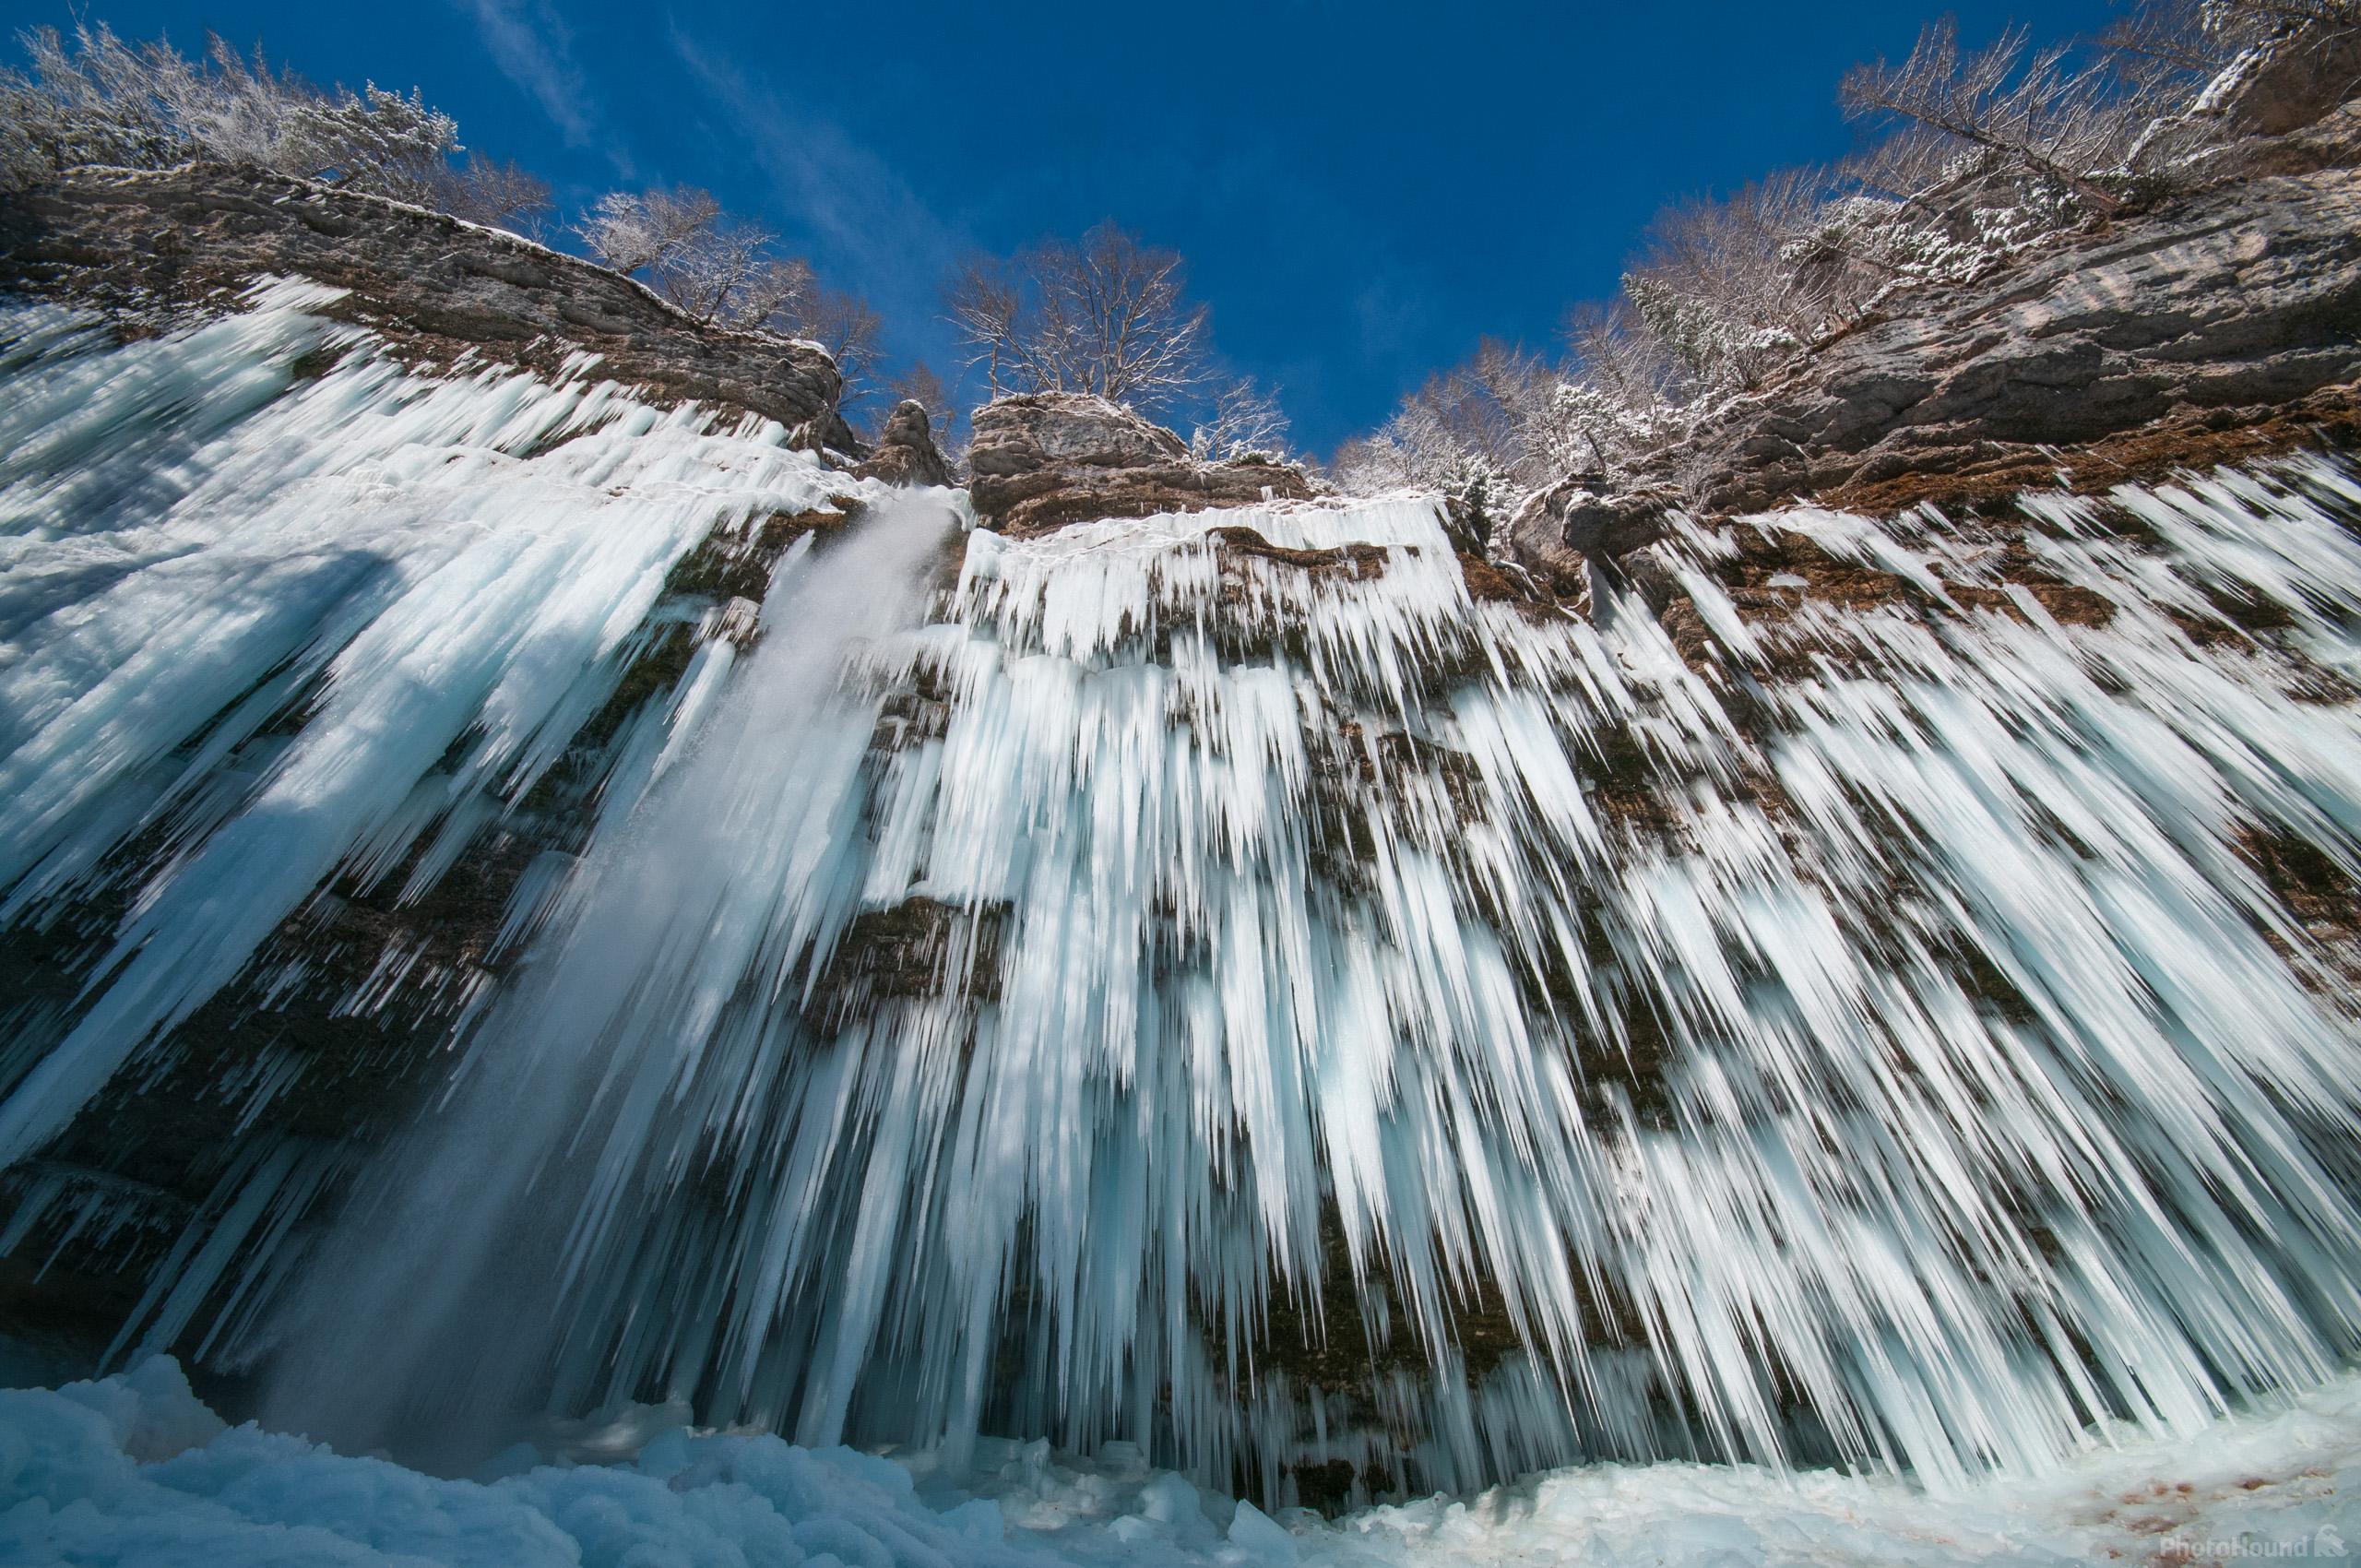 Image of Lower Peričnik Waterfall by Luka Esenko